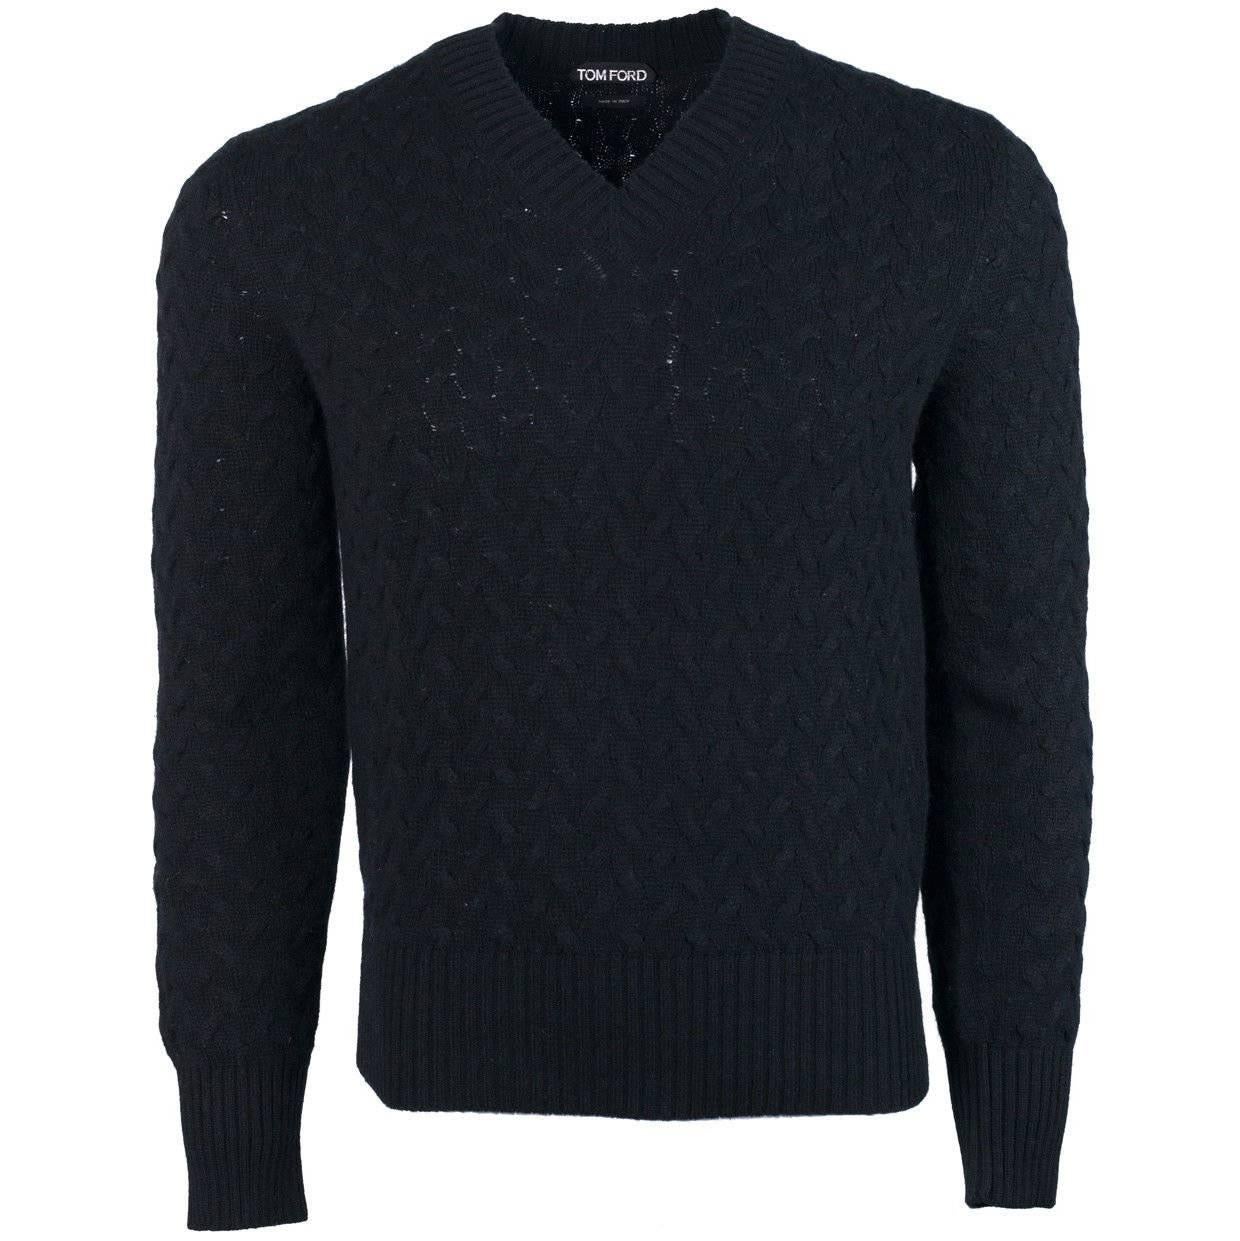 Tom Ford Black Cashmere Blend V Neck Curved Cable Knit Sweater For Sale